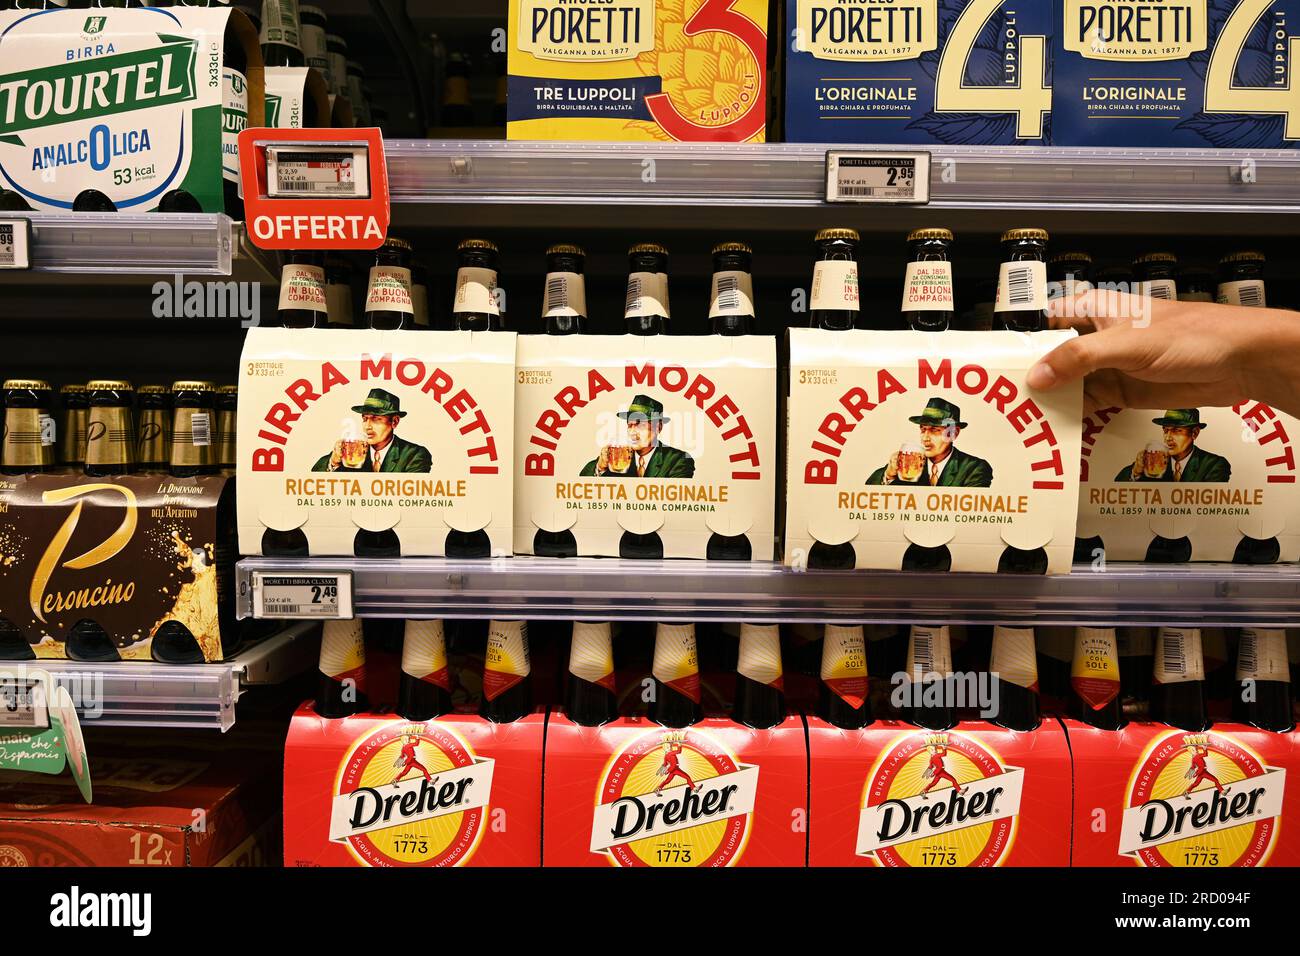 Birra Moretti Italian beer in a supermarket Stock Photo